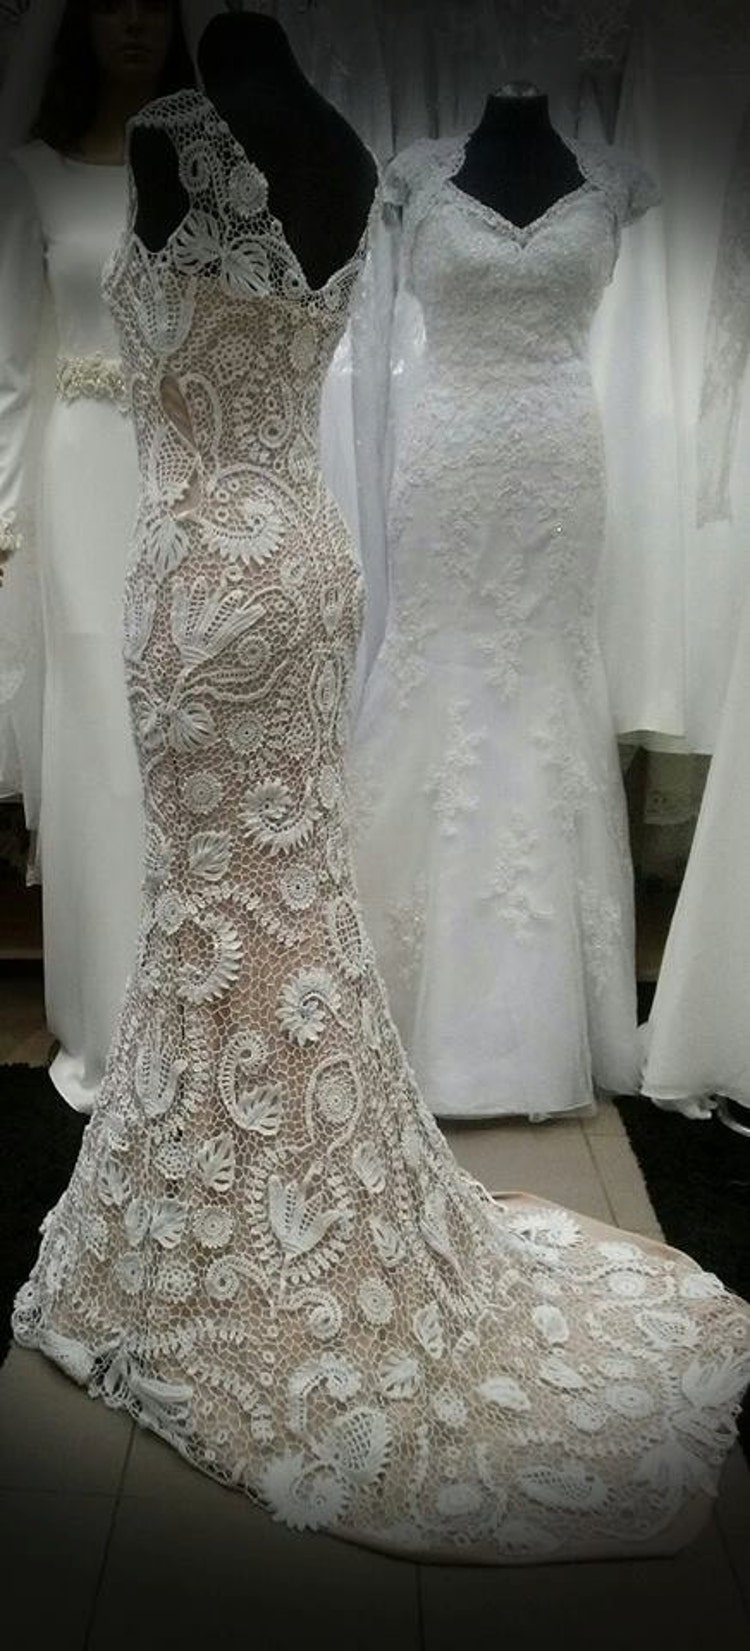 Unique irish crochet wedding dress-custom made by LaimInga ...